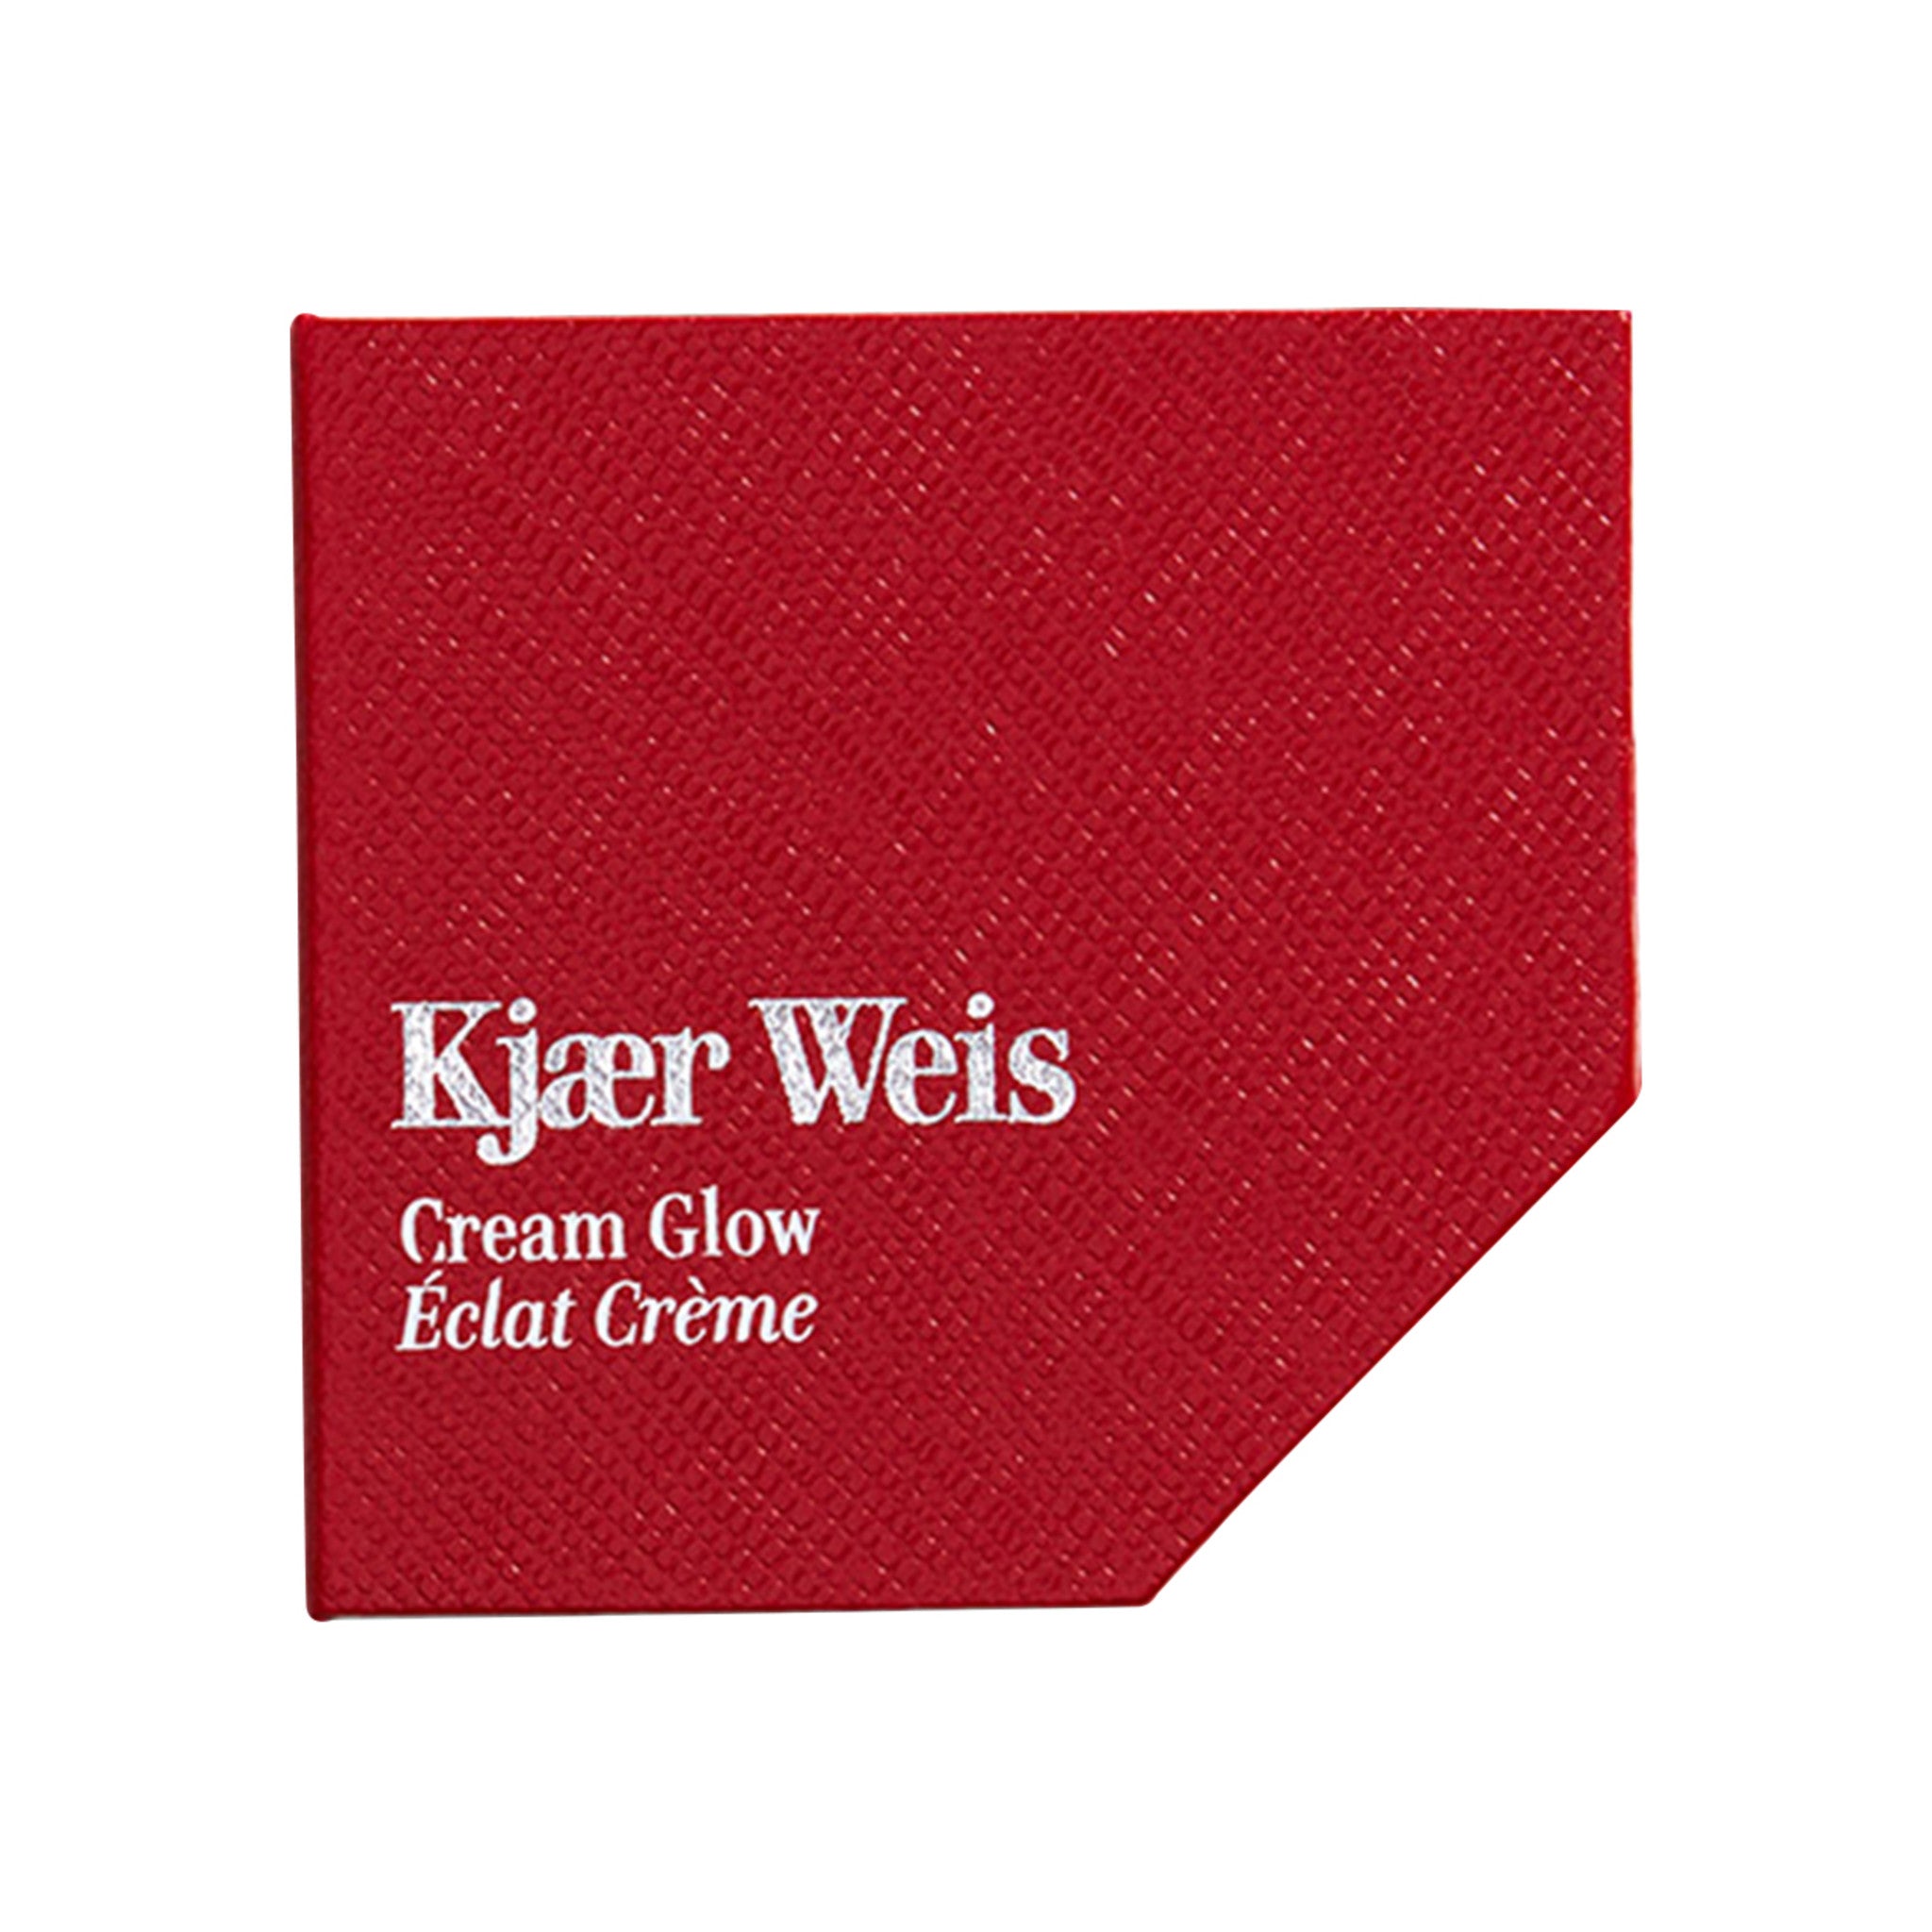 Kjaer Weis Red Edition Cream Glow Case main image.